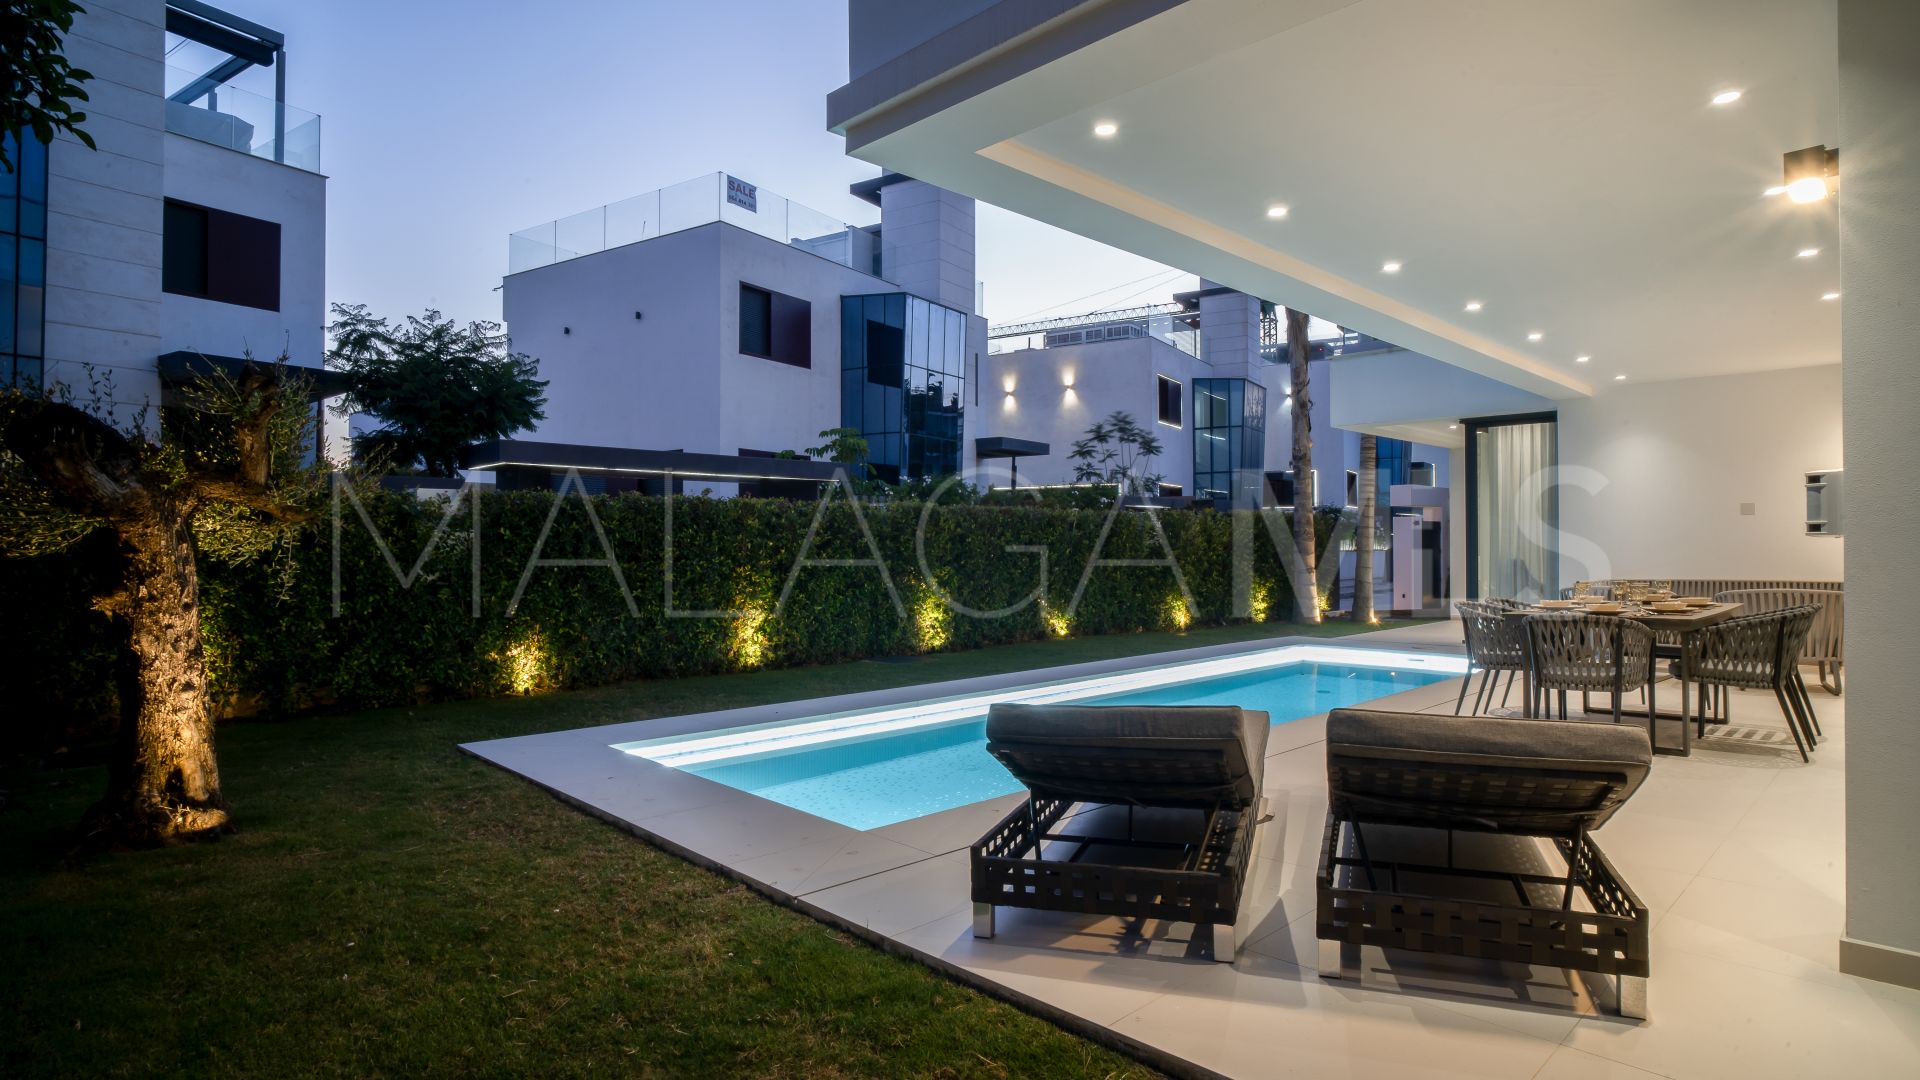 For sale villa in Rio Verde with 4 bedrooms